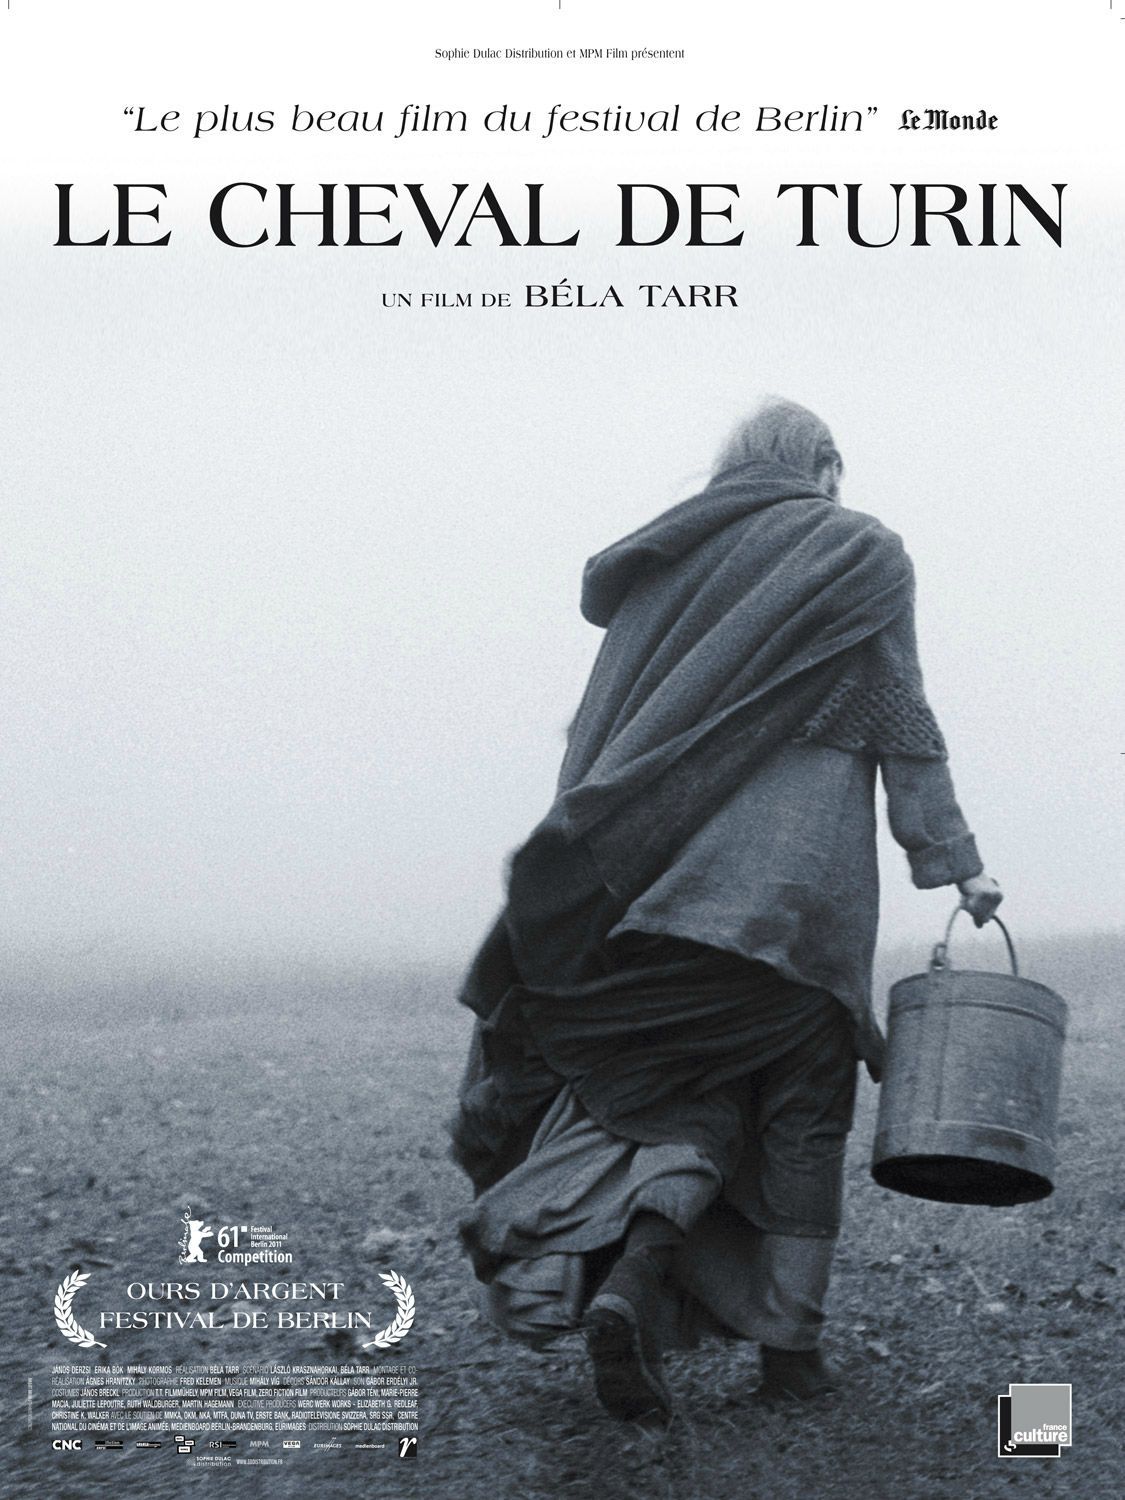 Le Cheval de Turin - Film (2011) streaming VF gratuit complet